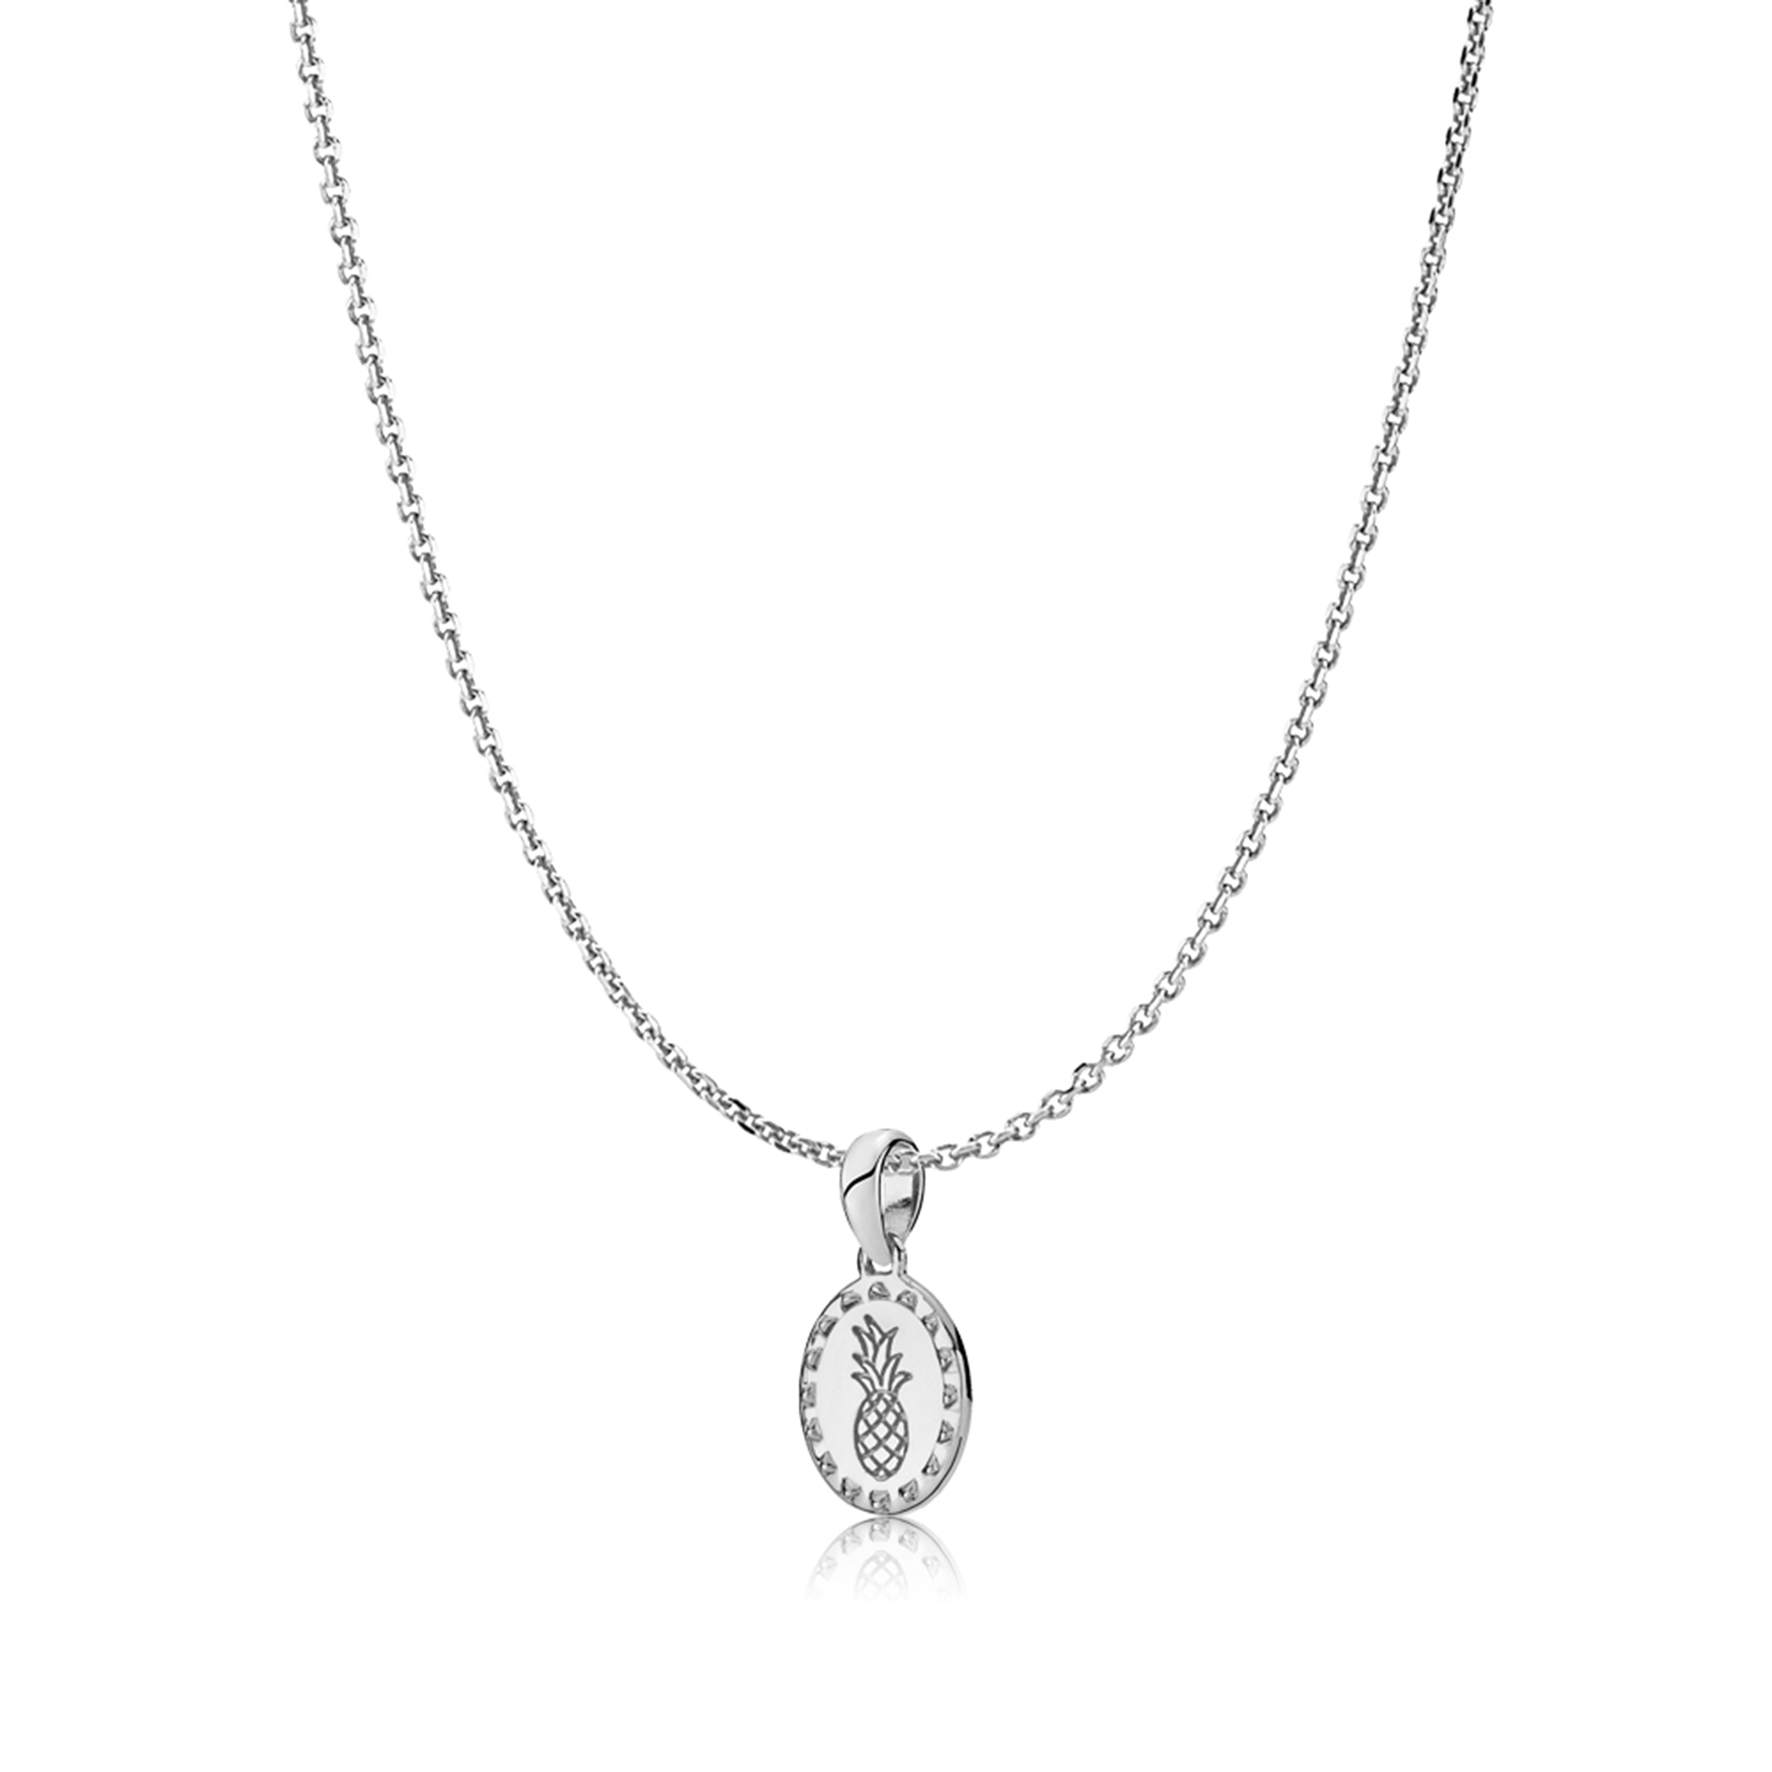 Anna By Sistie Round Pendant Necklace från Sistie i Silver Sterling 925